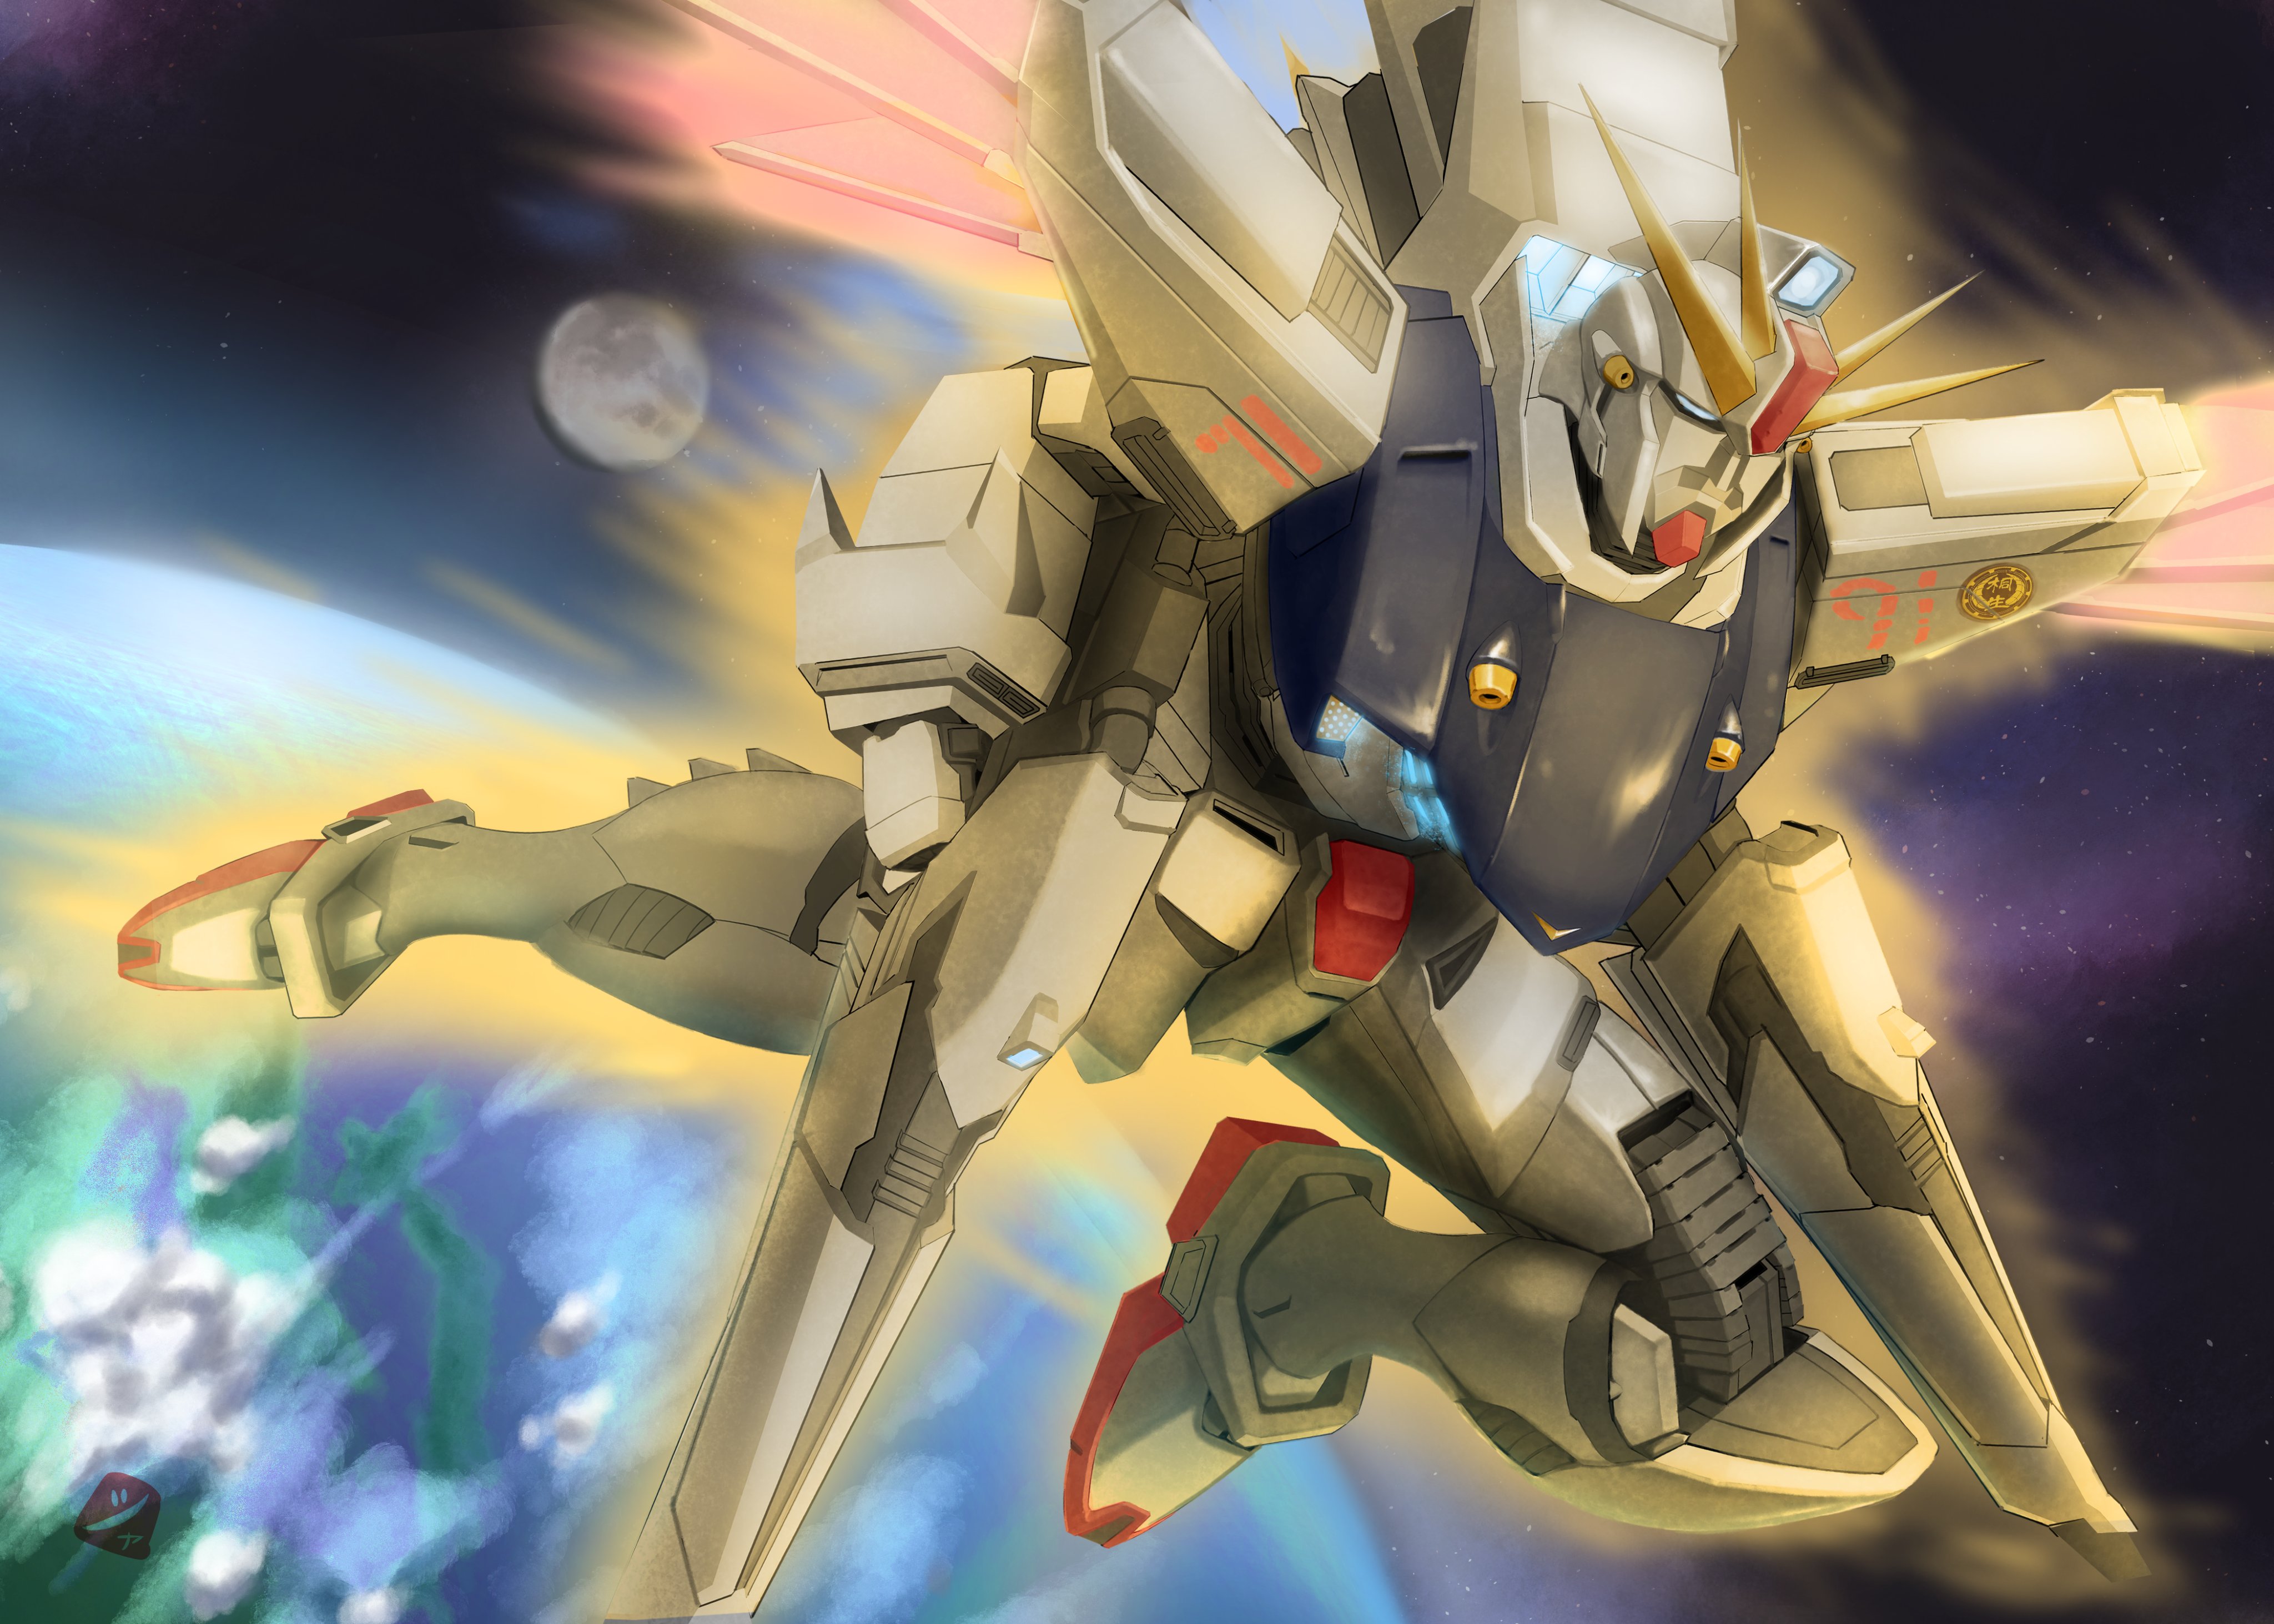 Gundam F91 Wallpapers